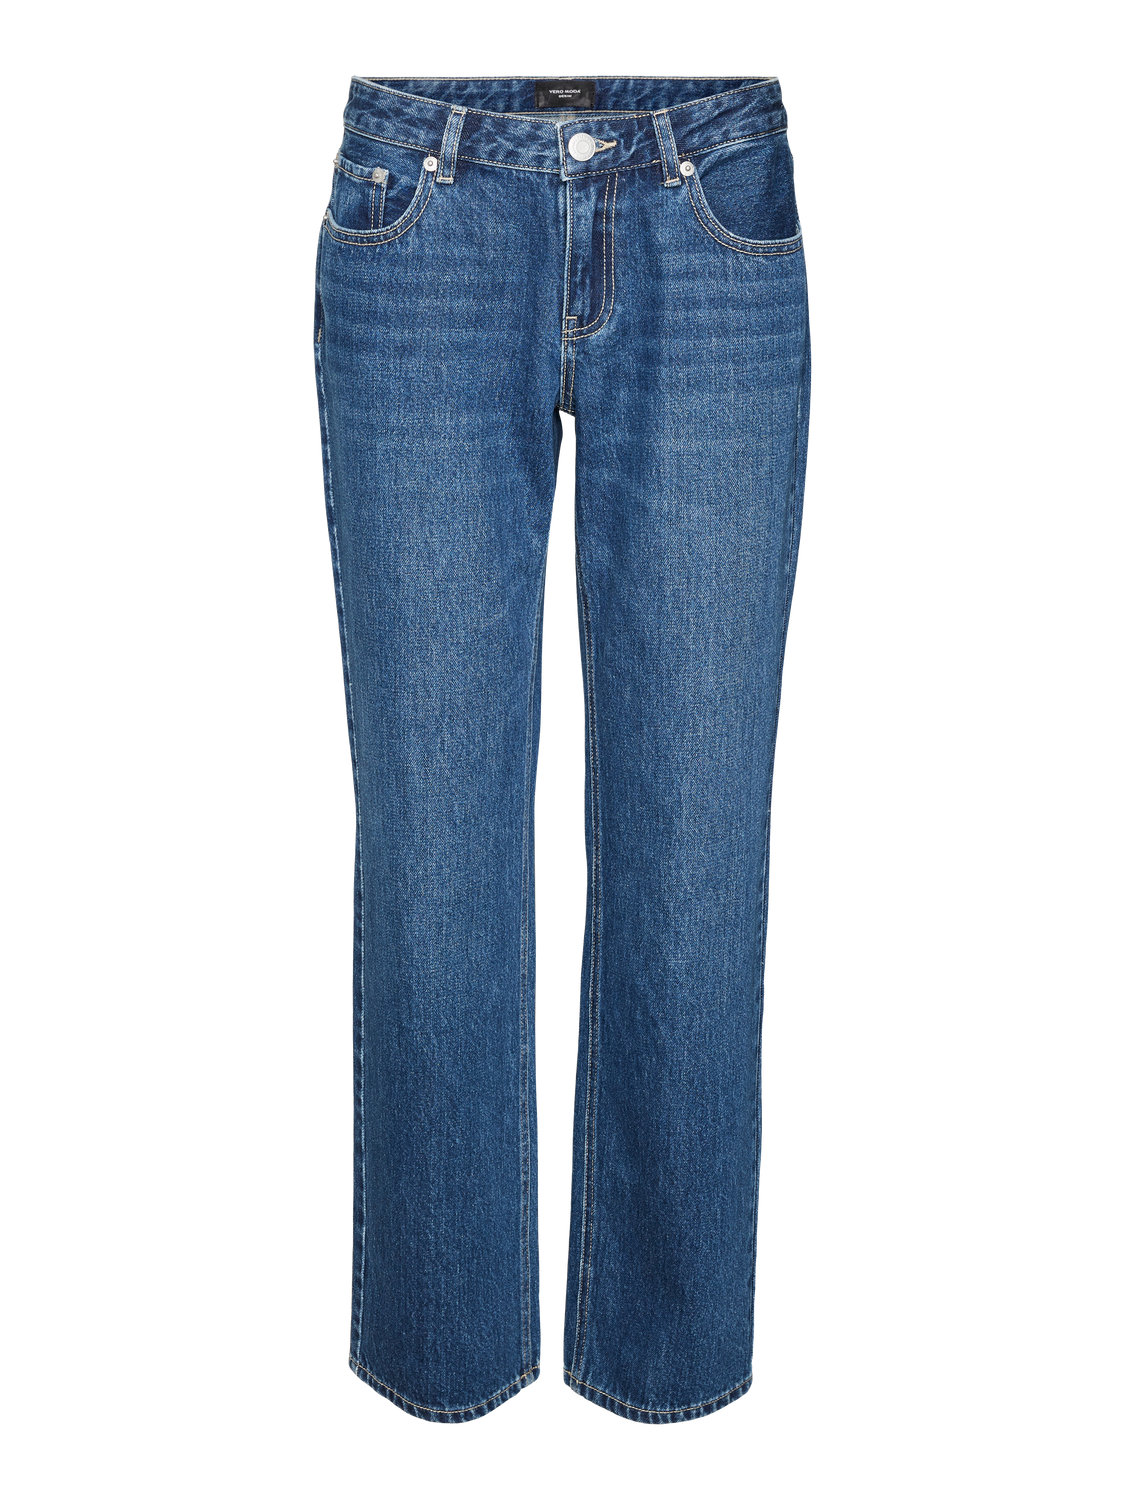 VMPAM Jeans - Medium Blue Denim